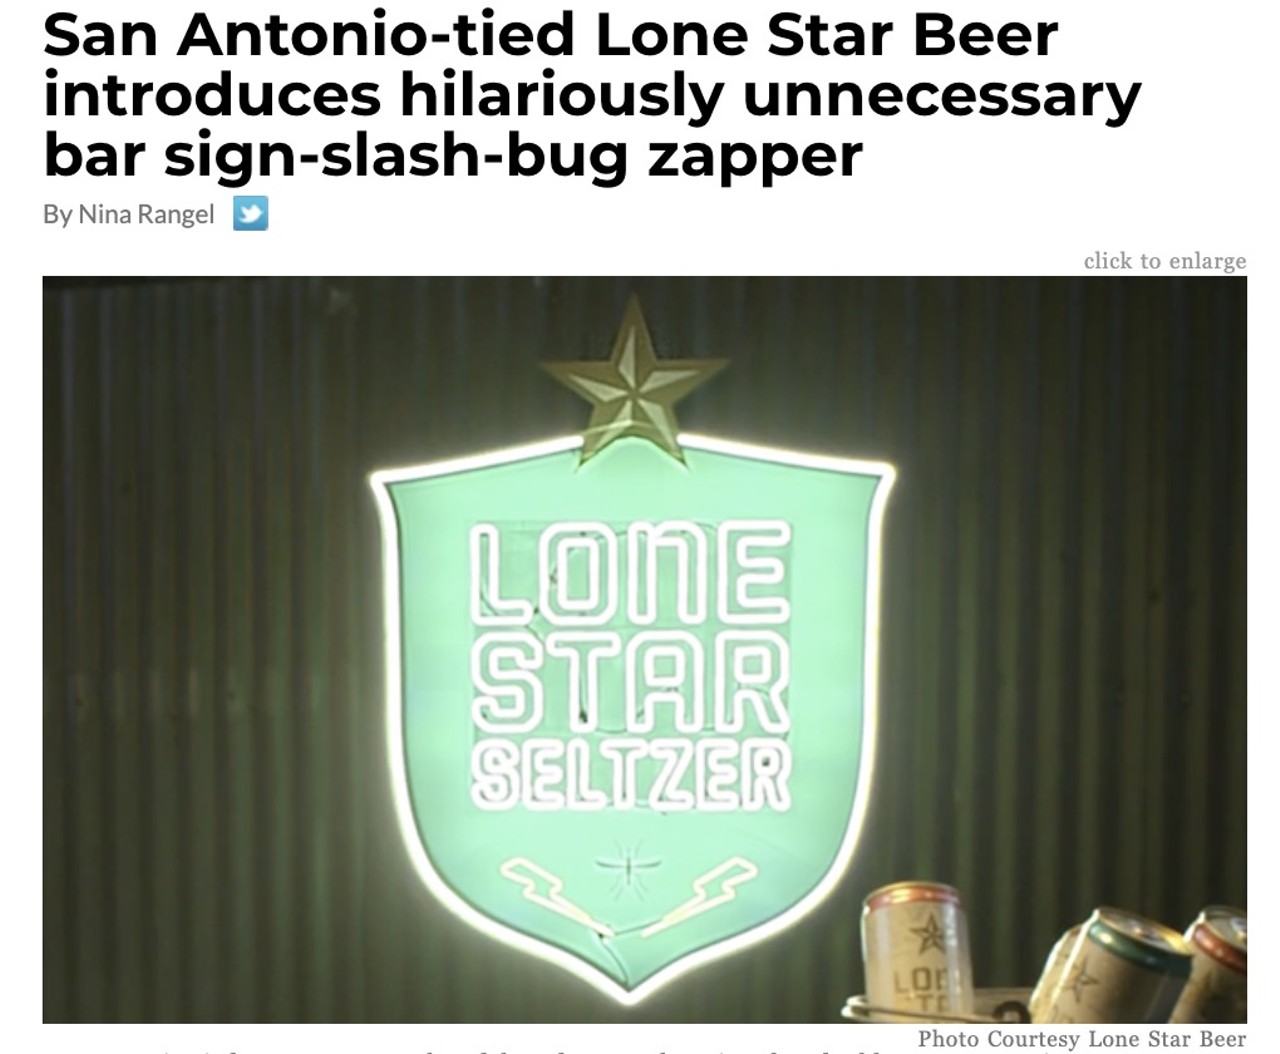 San Antonio-tied Lone Star Beer introduces hilariously unnecessary bar sign-slash-bug zapper